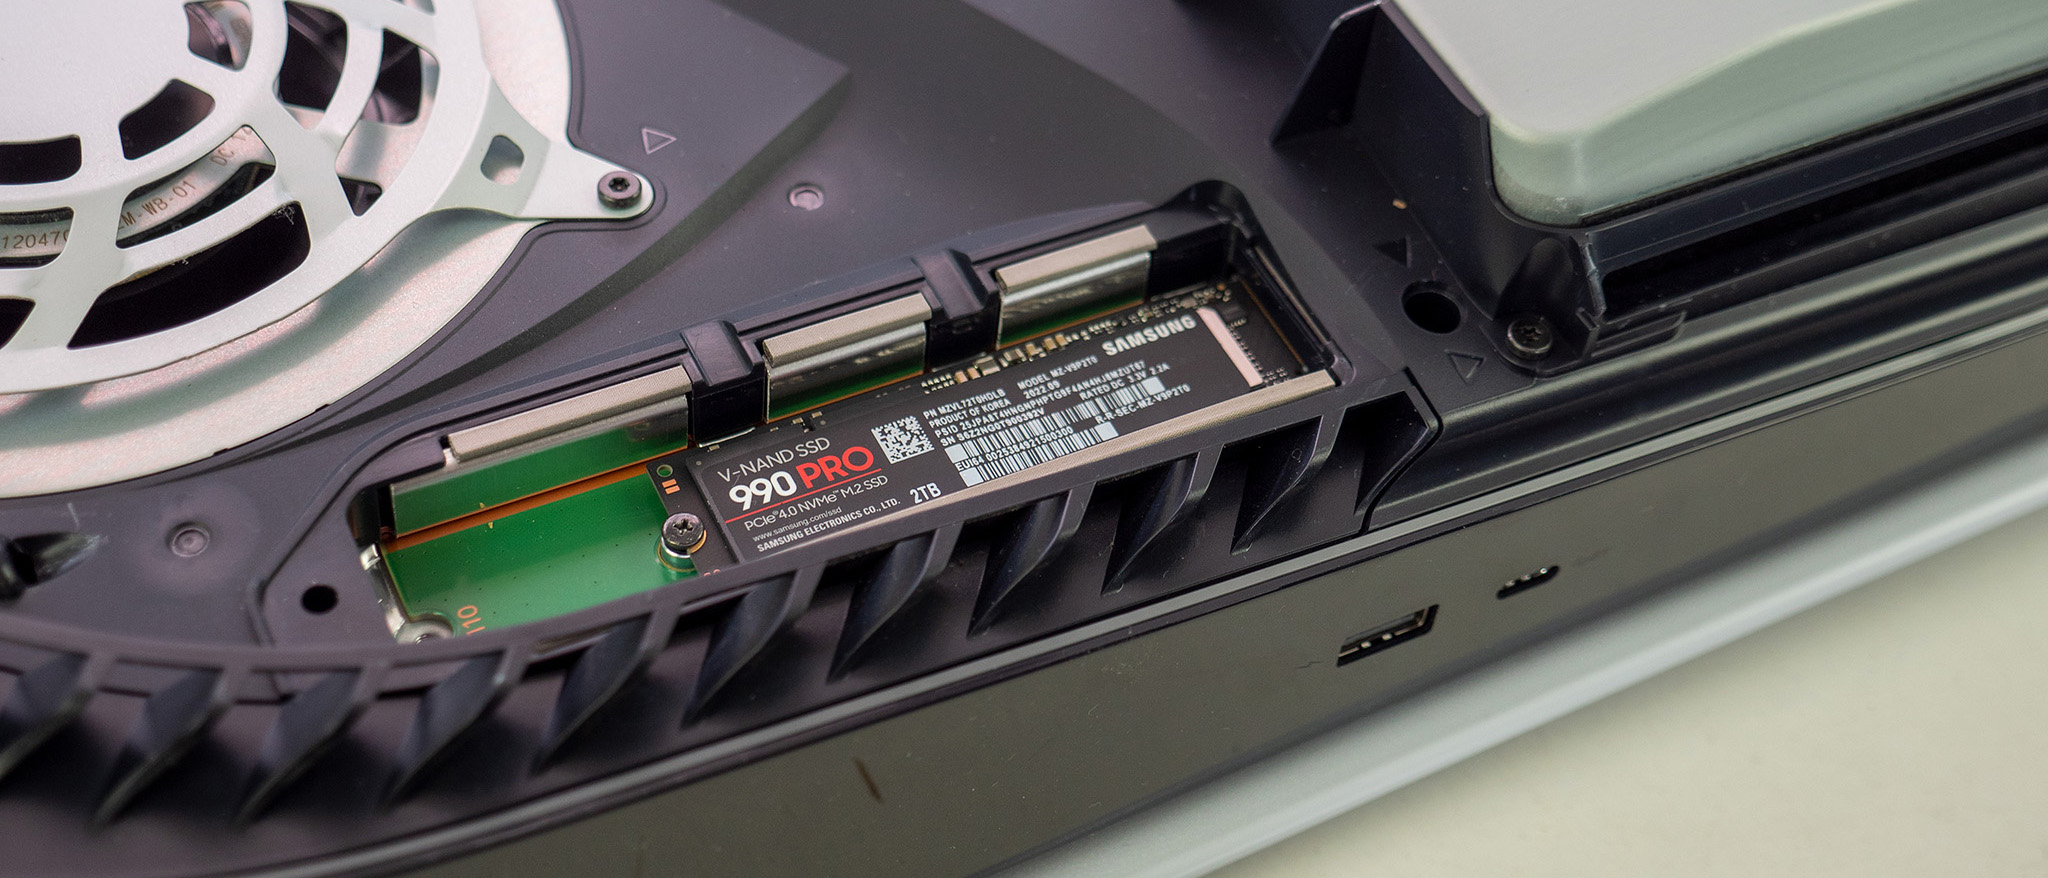 Samsung 990 Pro SSD PC PS5 gaming upgrade